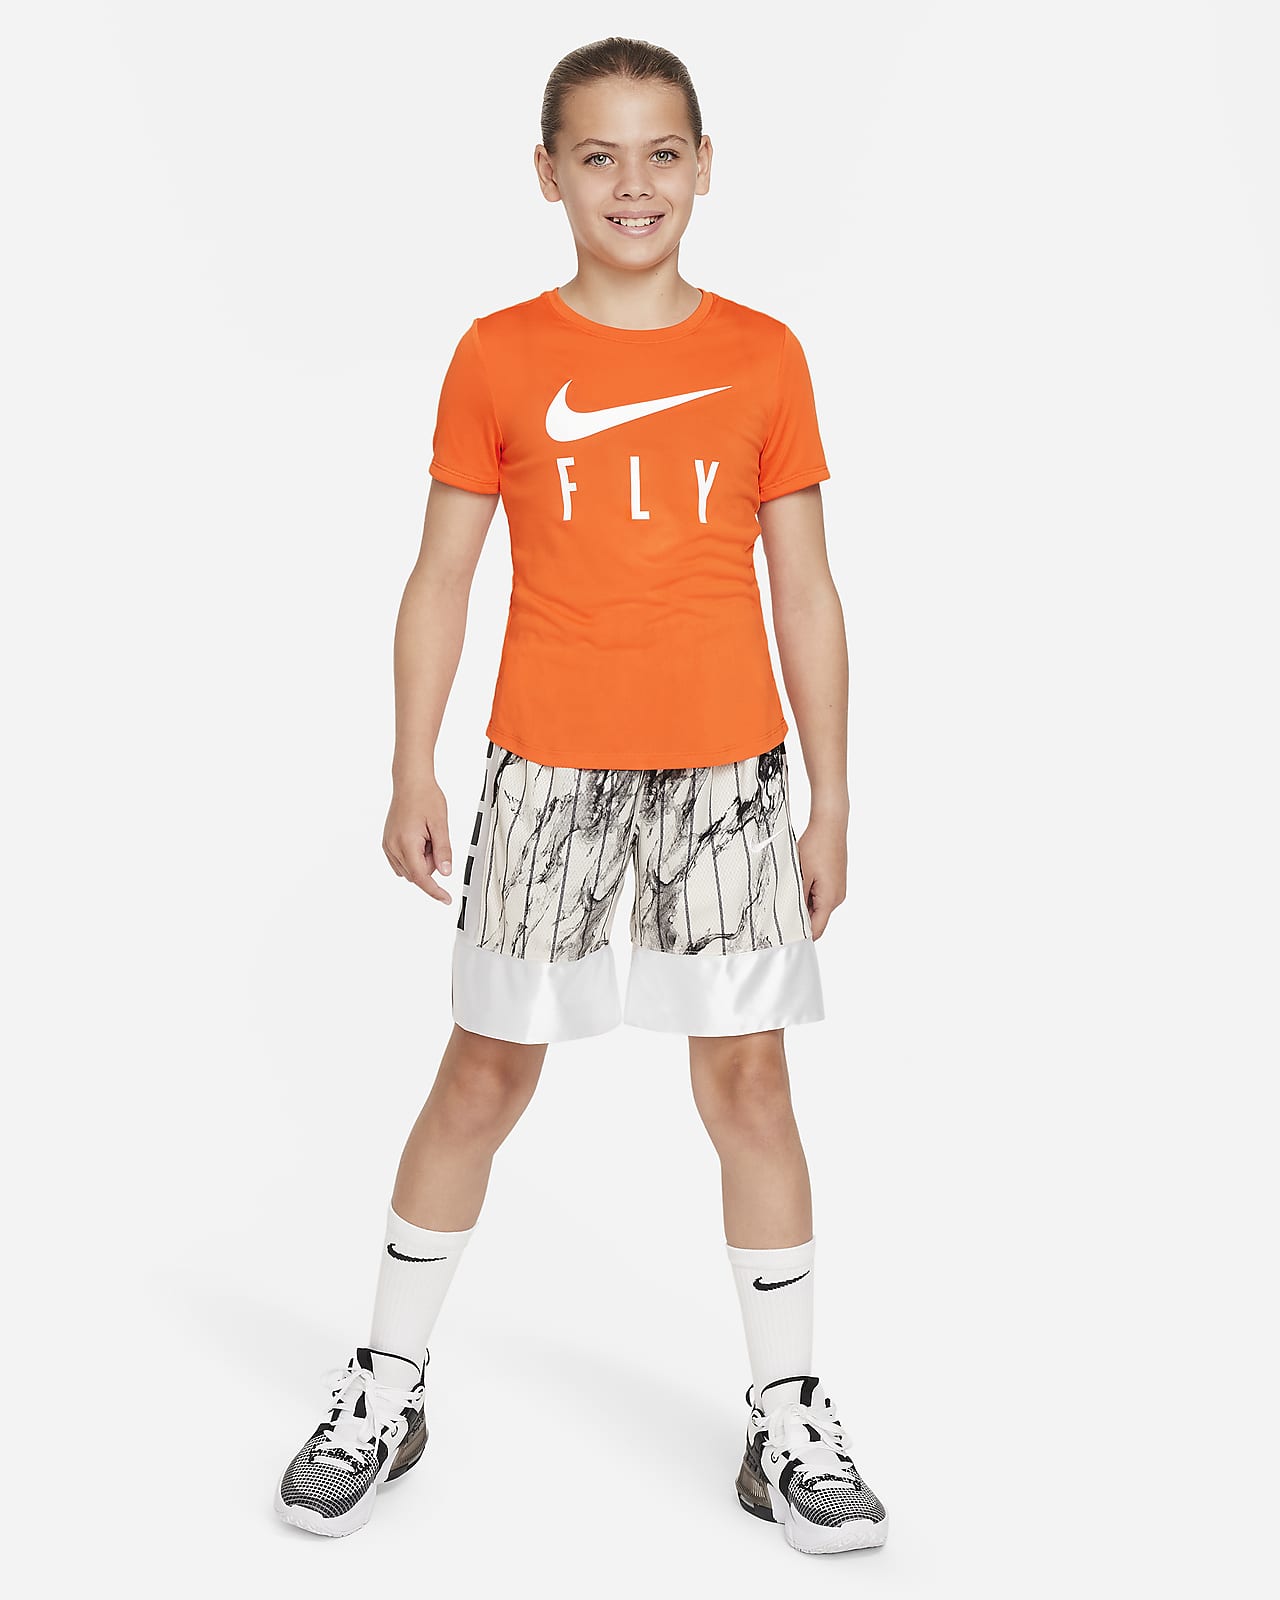 One Kids\' T-Shirt. Dri-FIT Big Fly Nike (Girls\') Swoosh